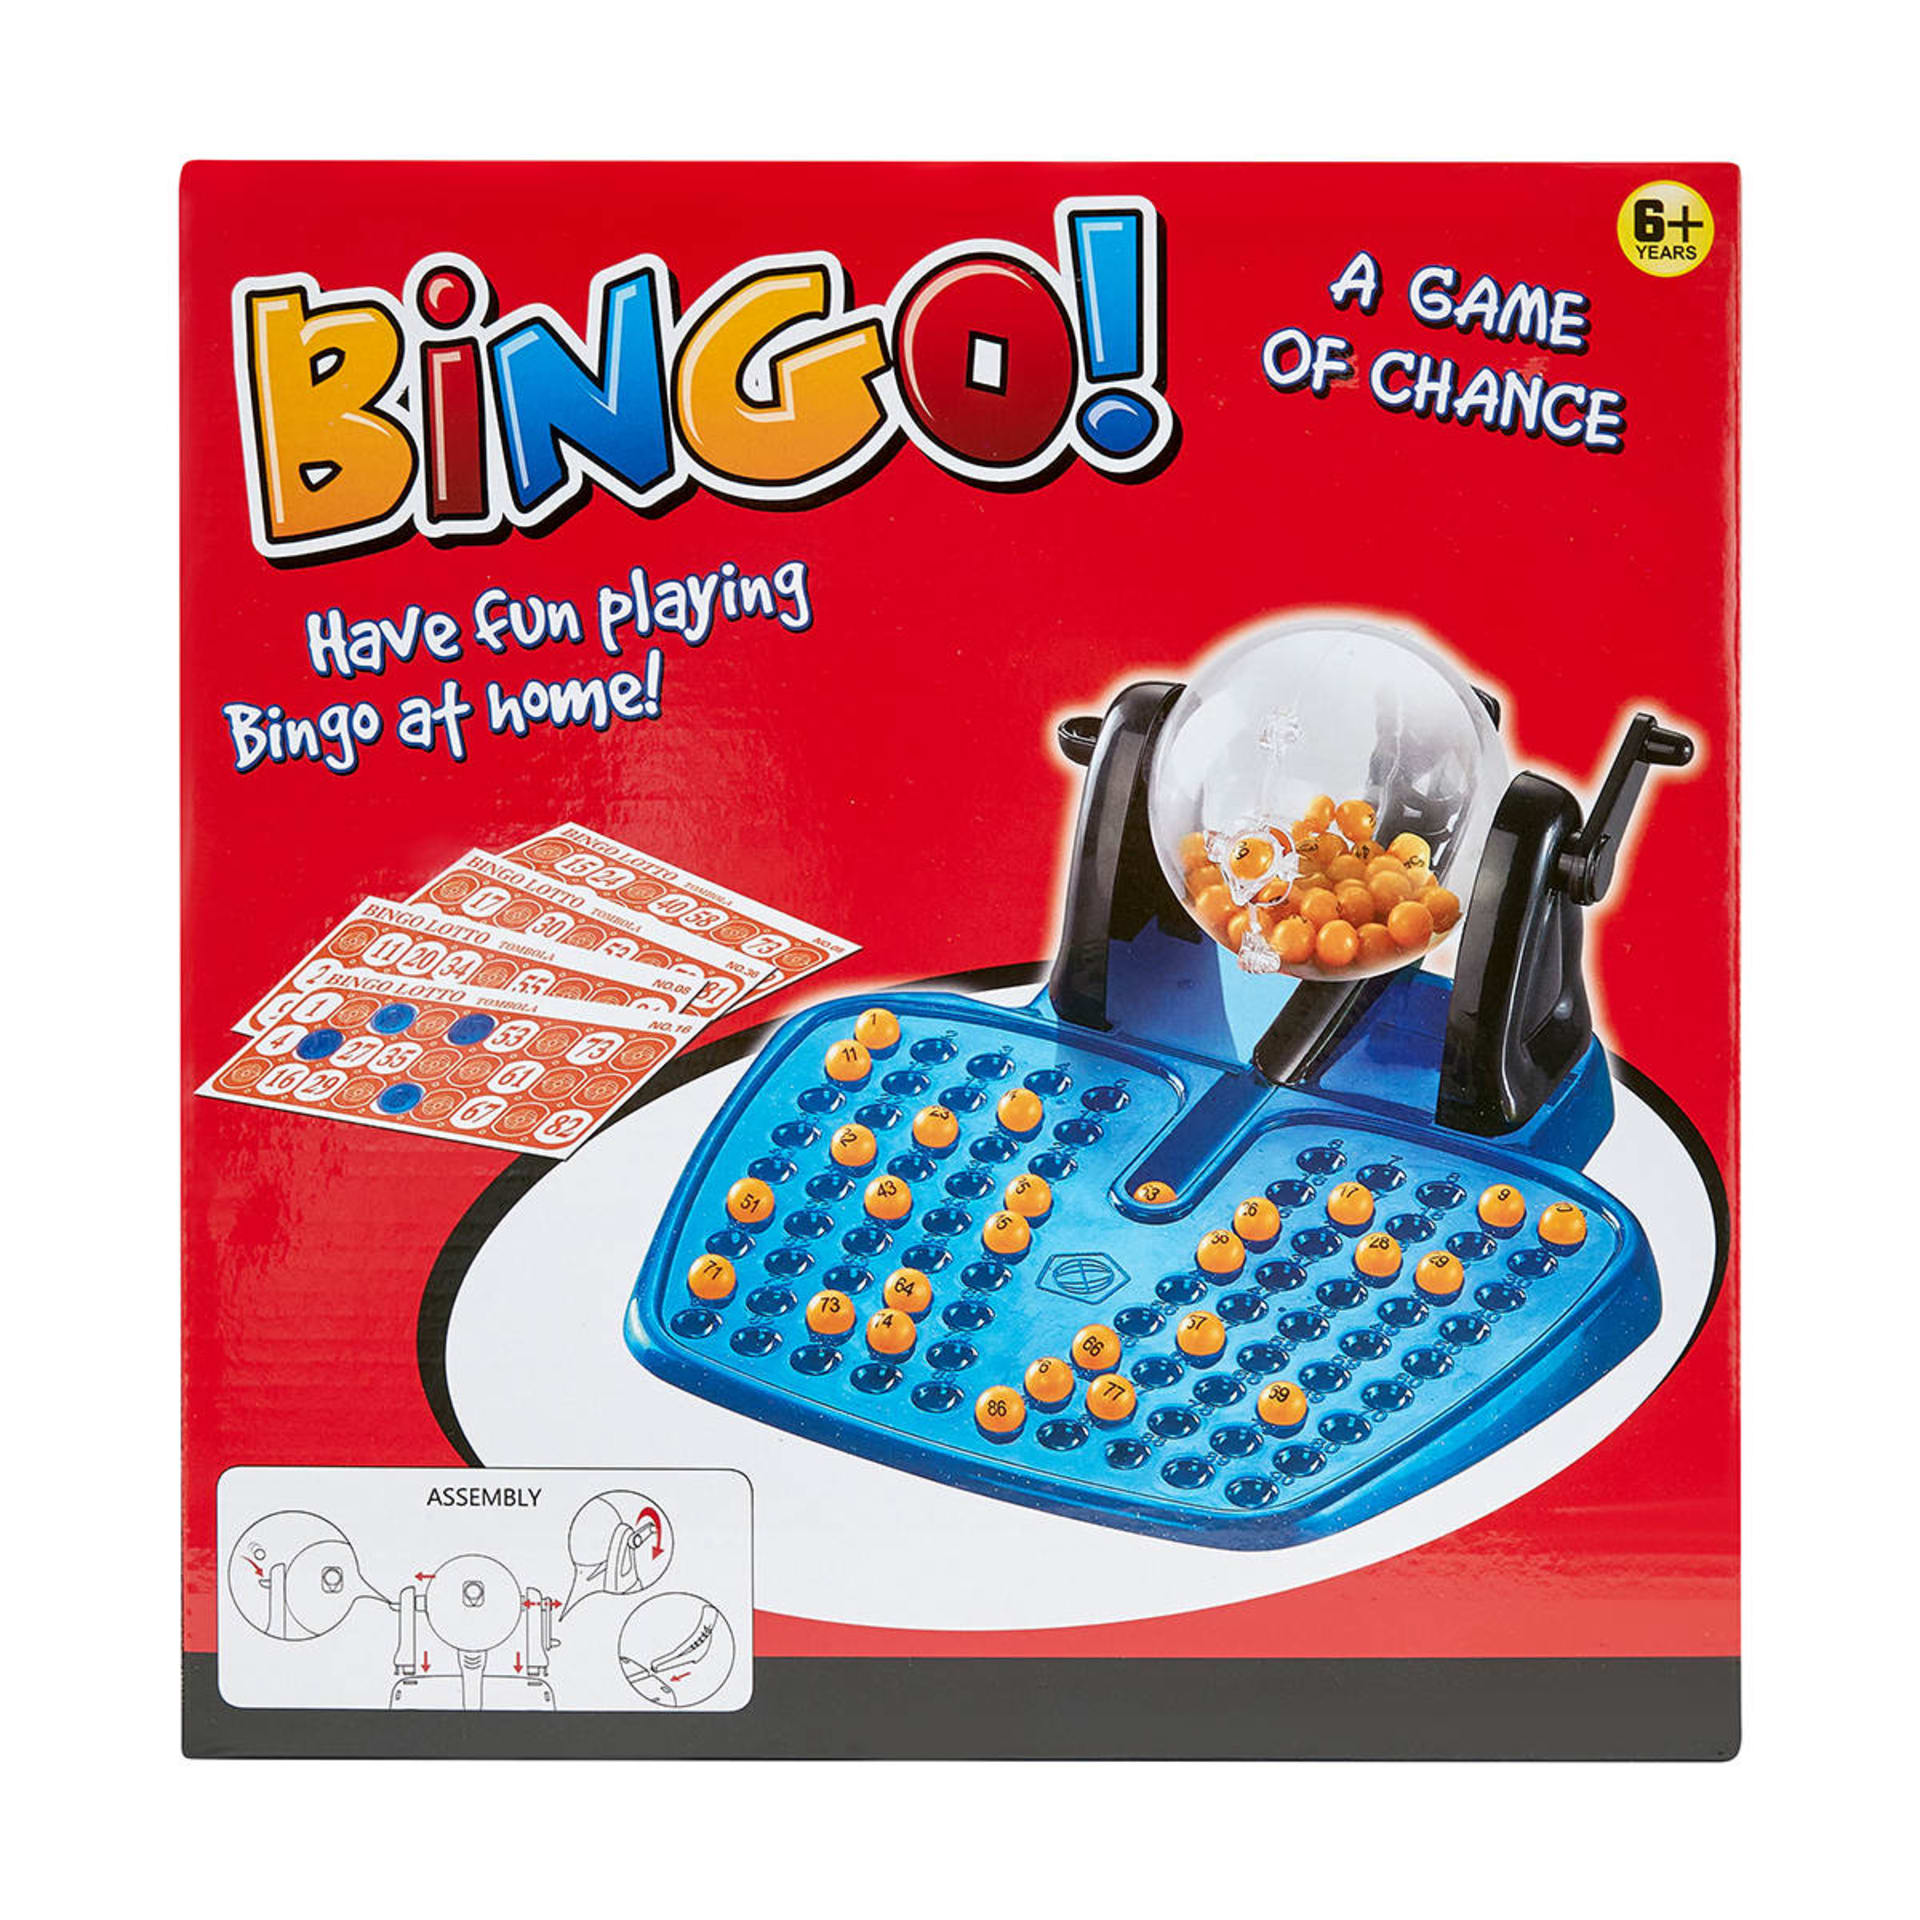 bingo-a-game-of-chance-kmart